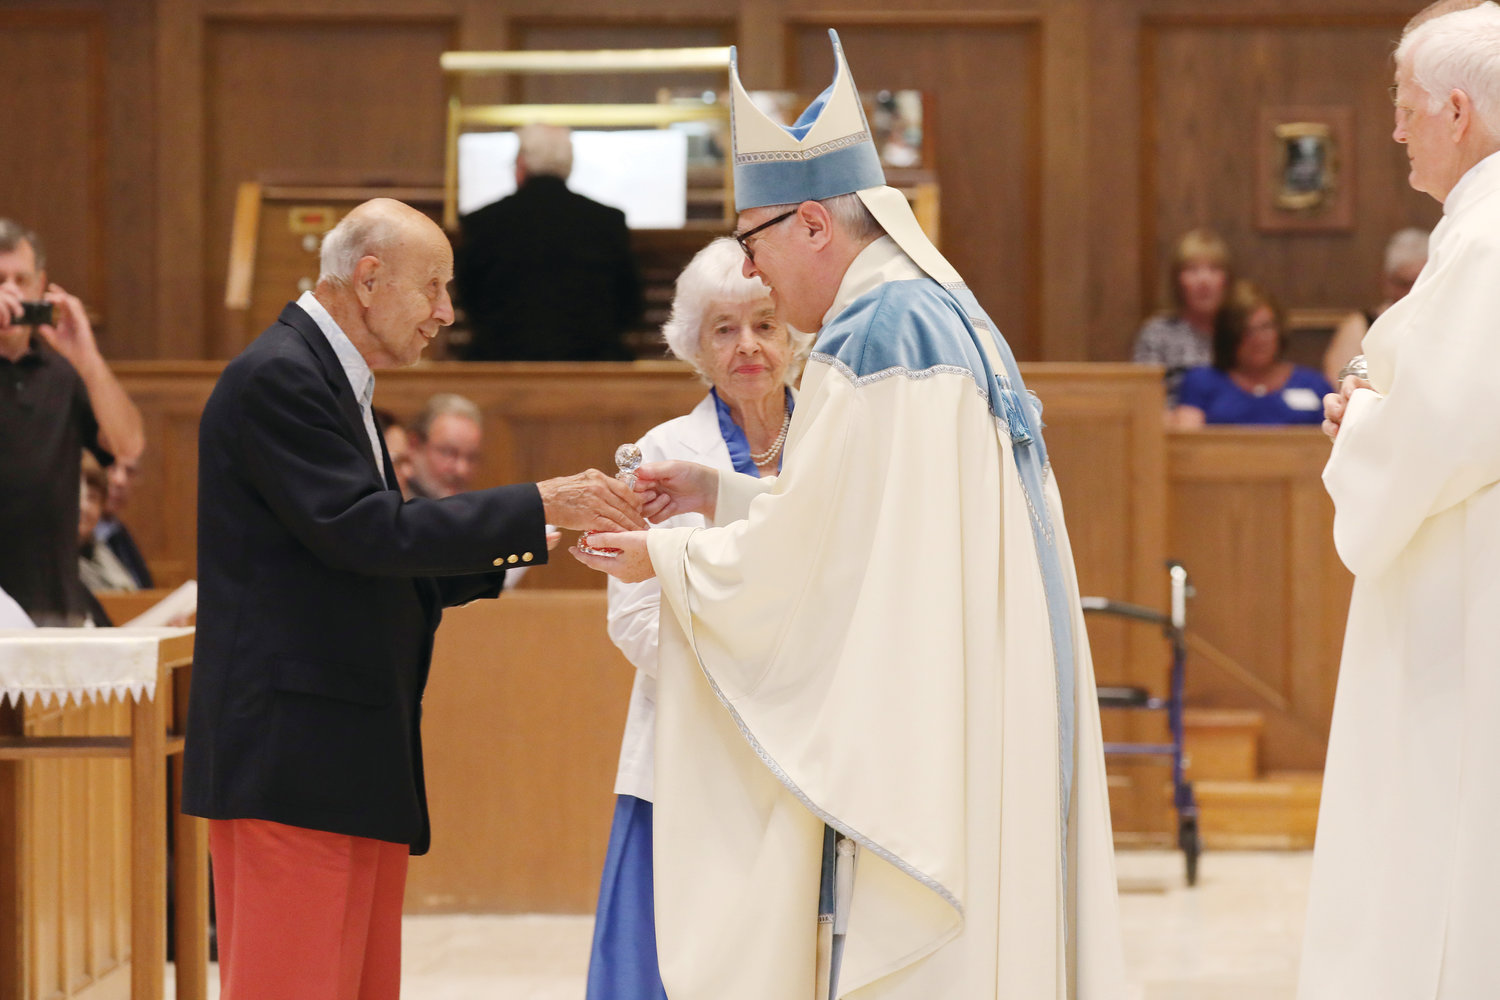 Celebrating 72 years of marriage, Hugo and Serafina Deascentis of Jesus Saviour Parish, Newport, present the gifts to Bishop Thomas J. Tobin.